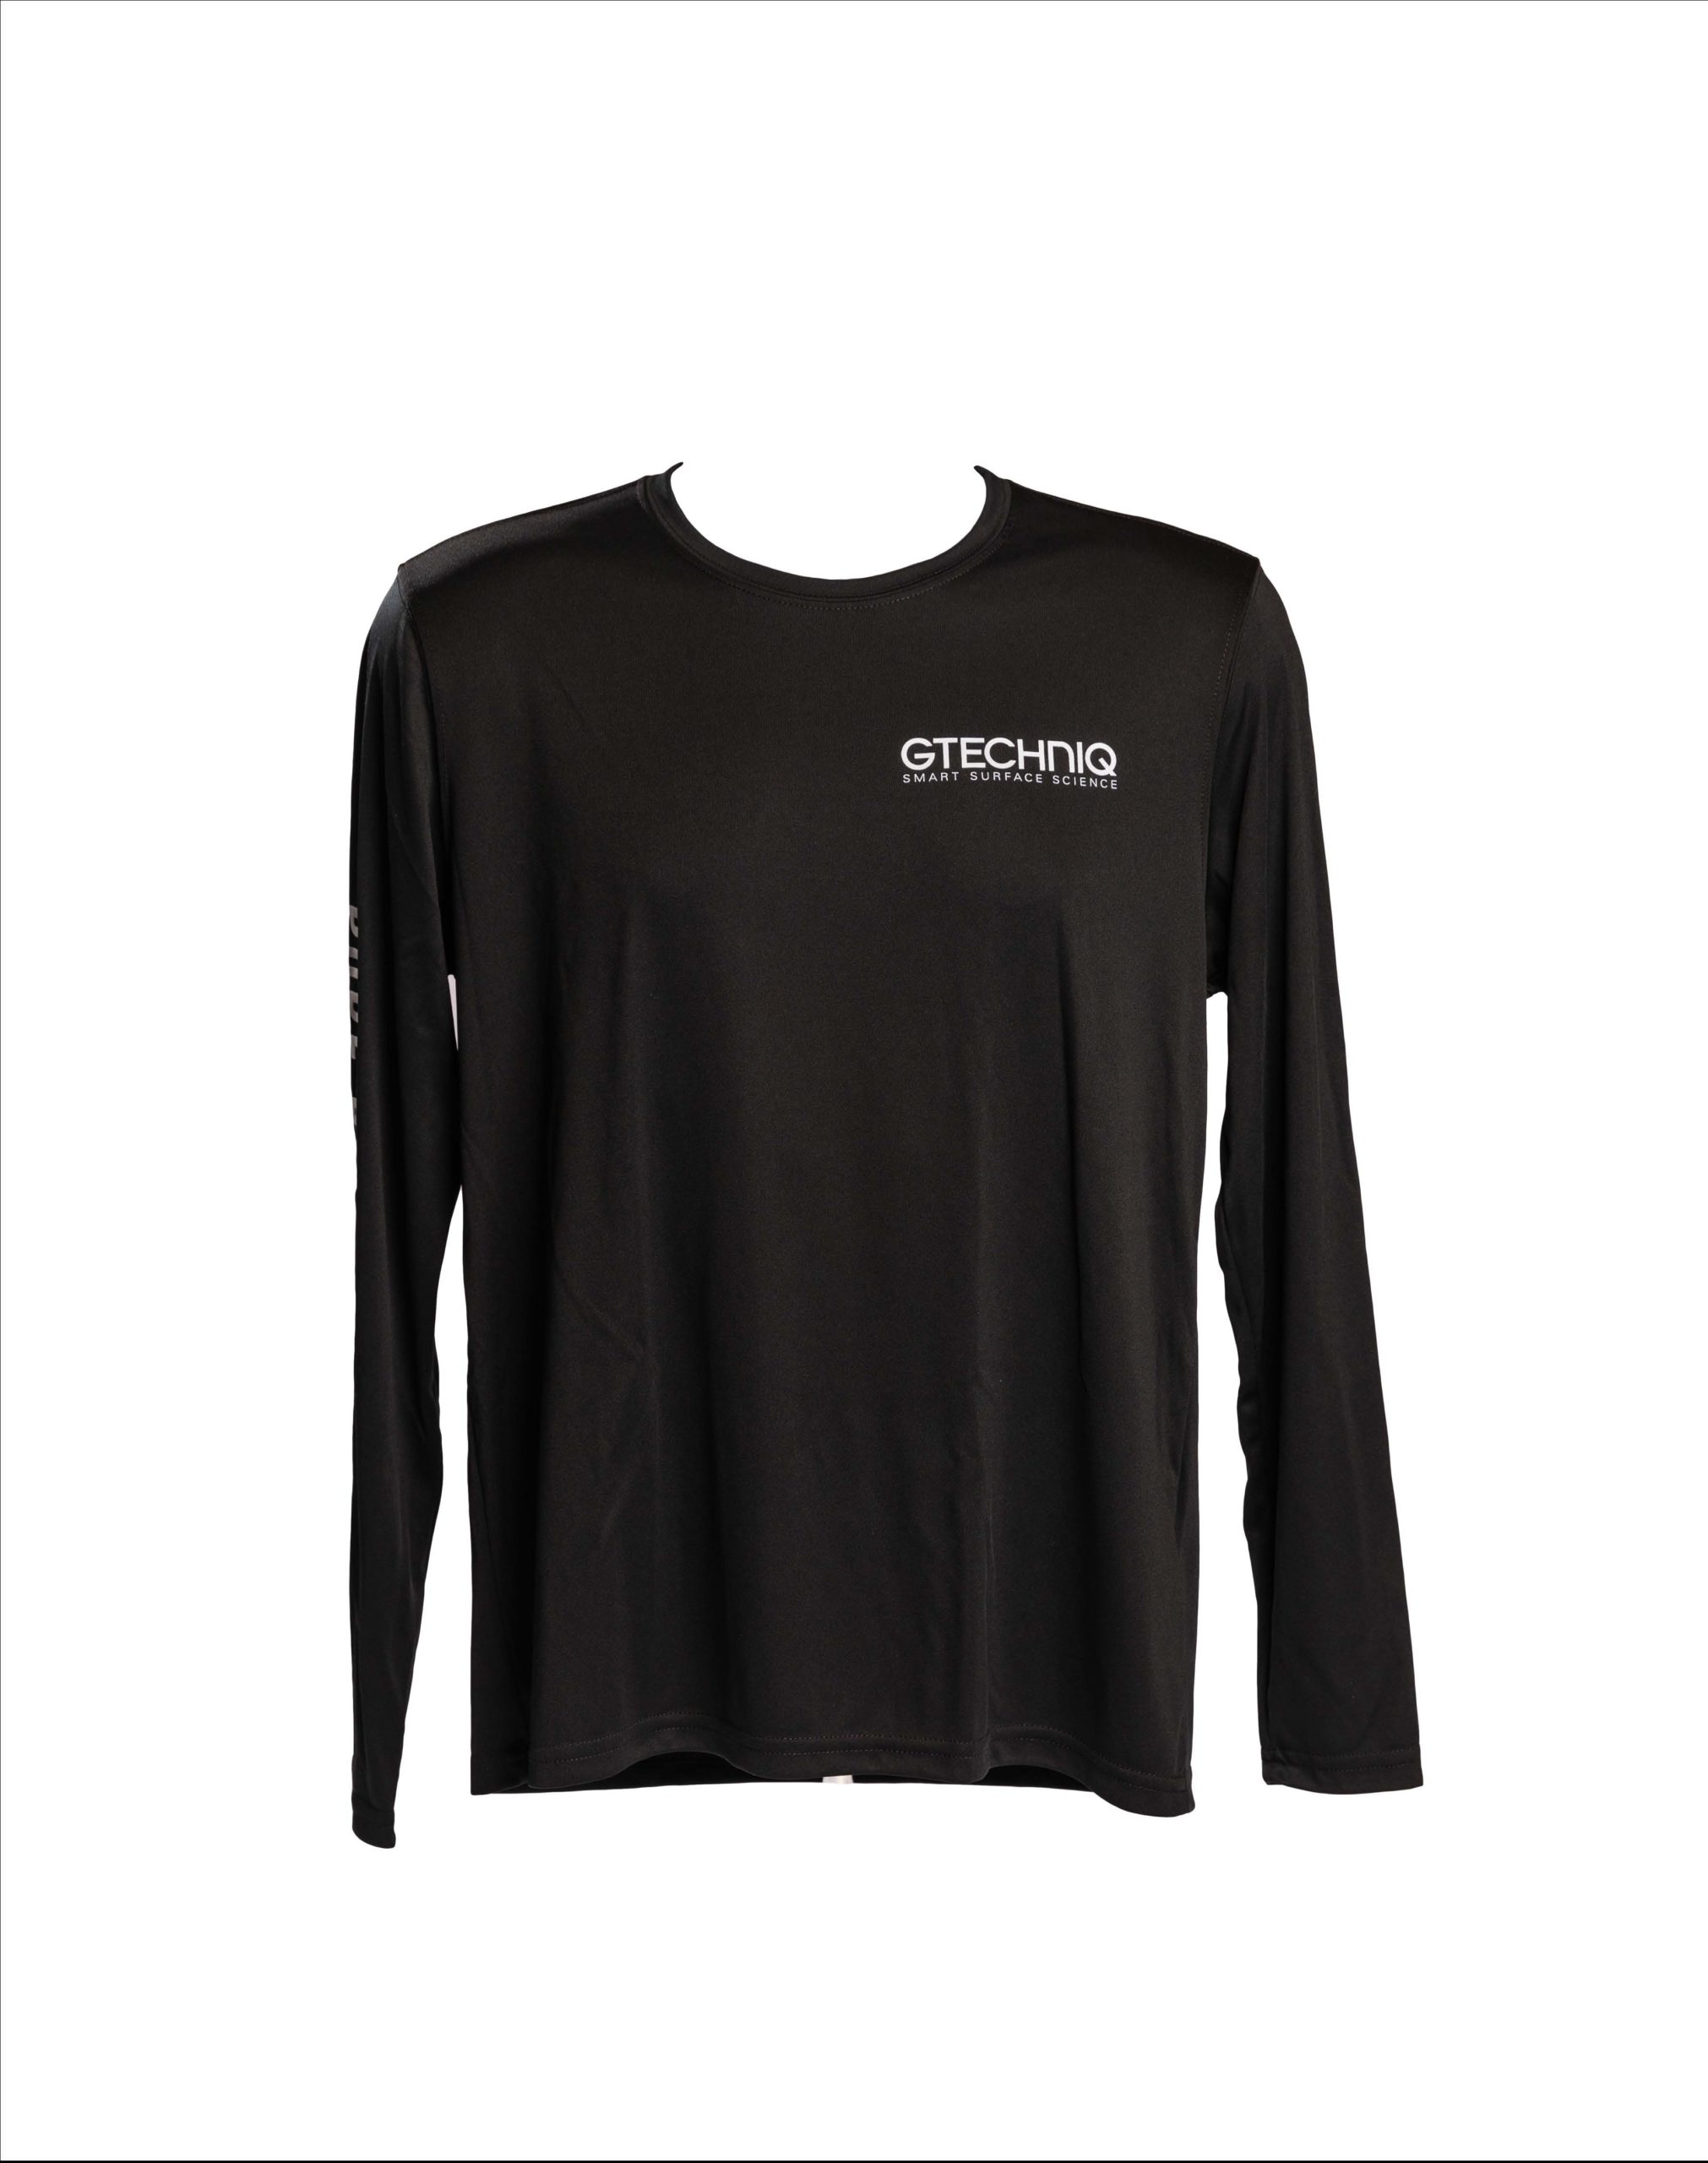 Long Sleeve Sun Protection Shirt - Accredited Black - Gtechniq USA